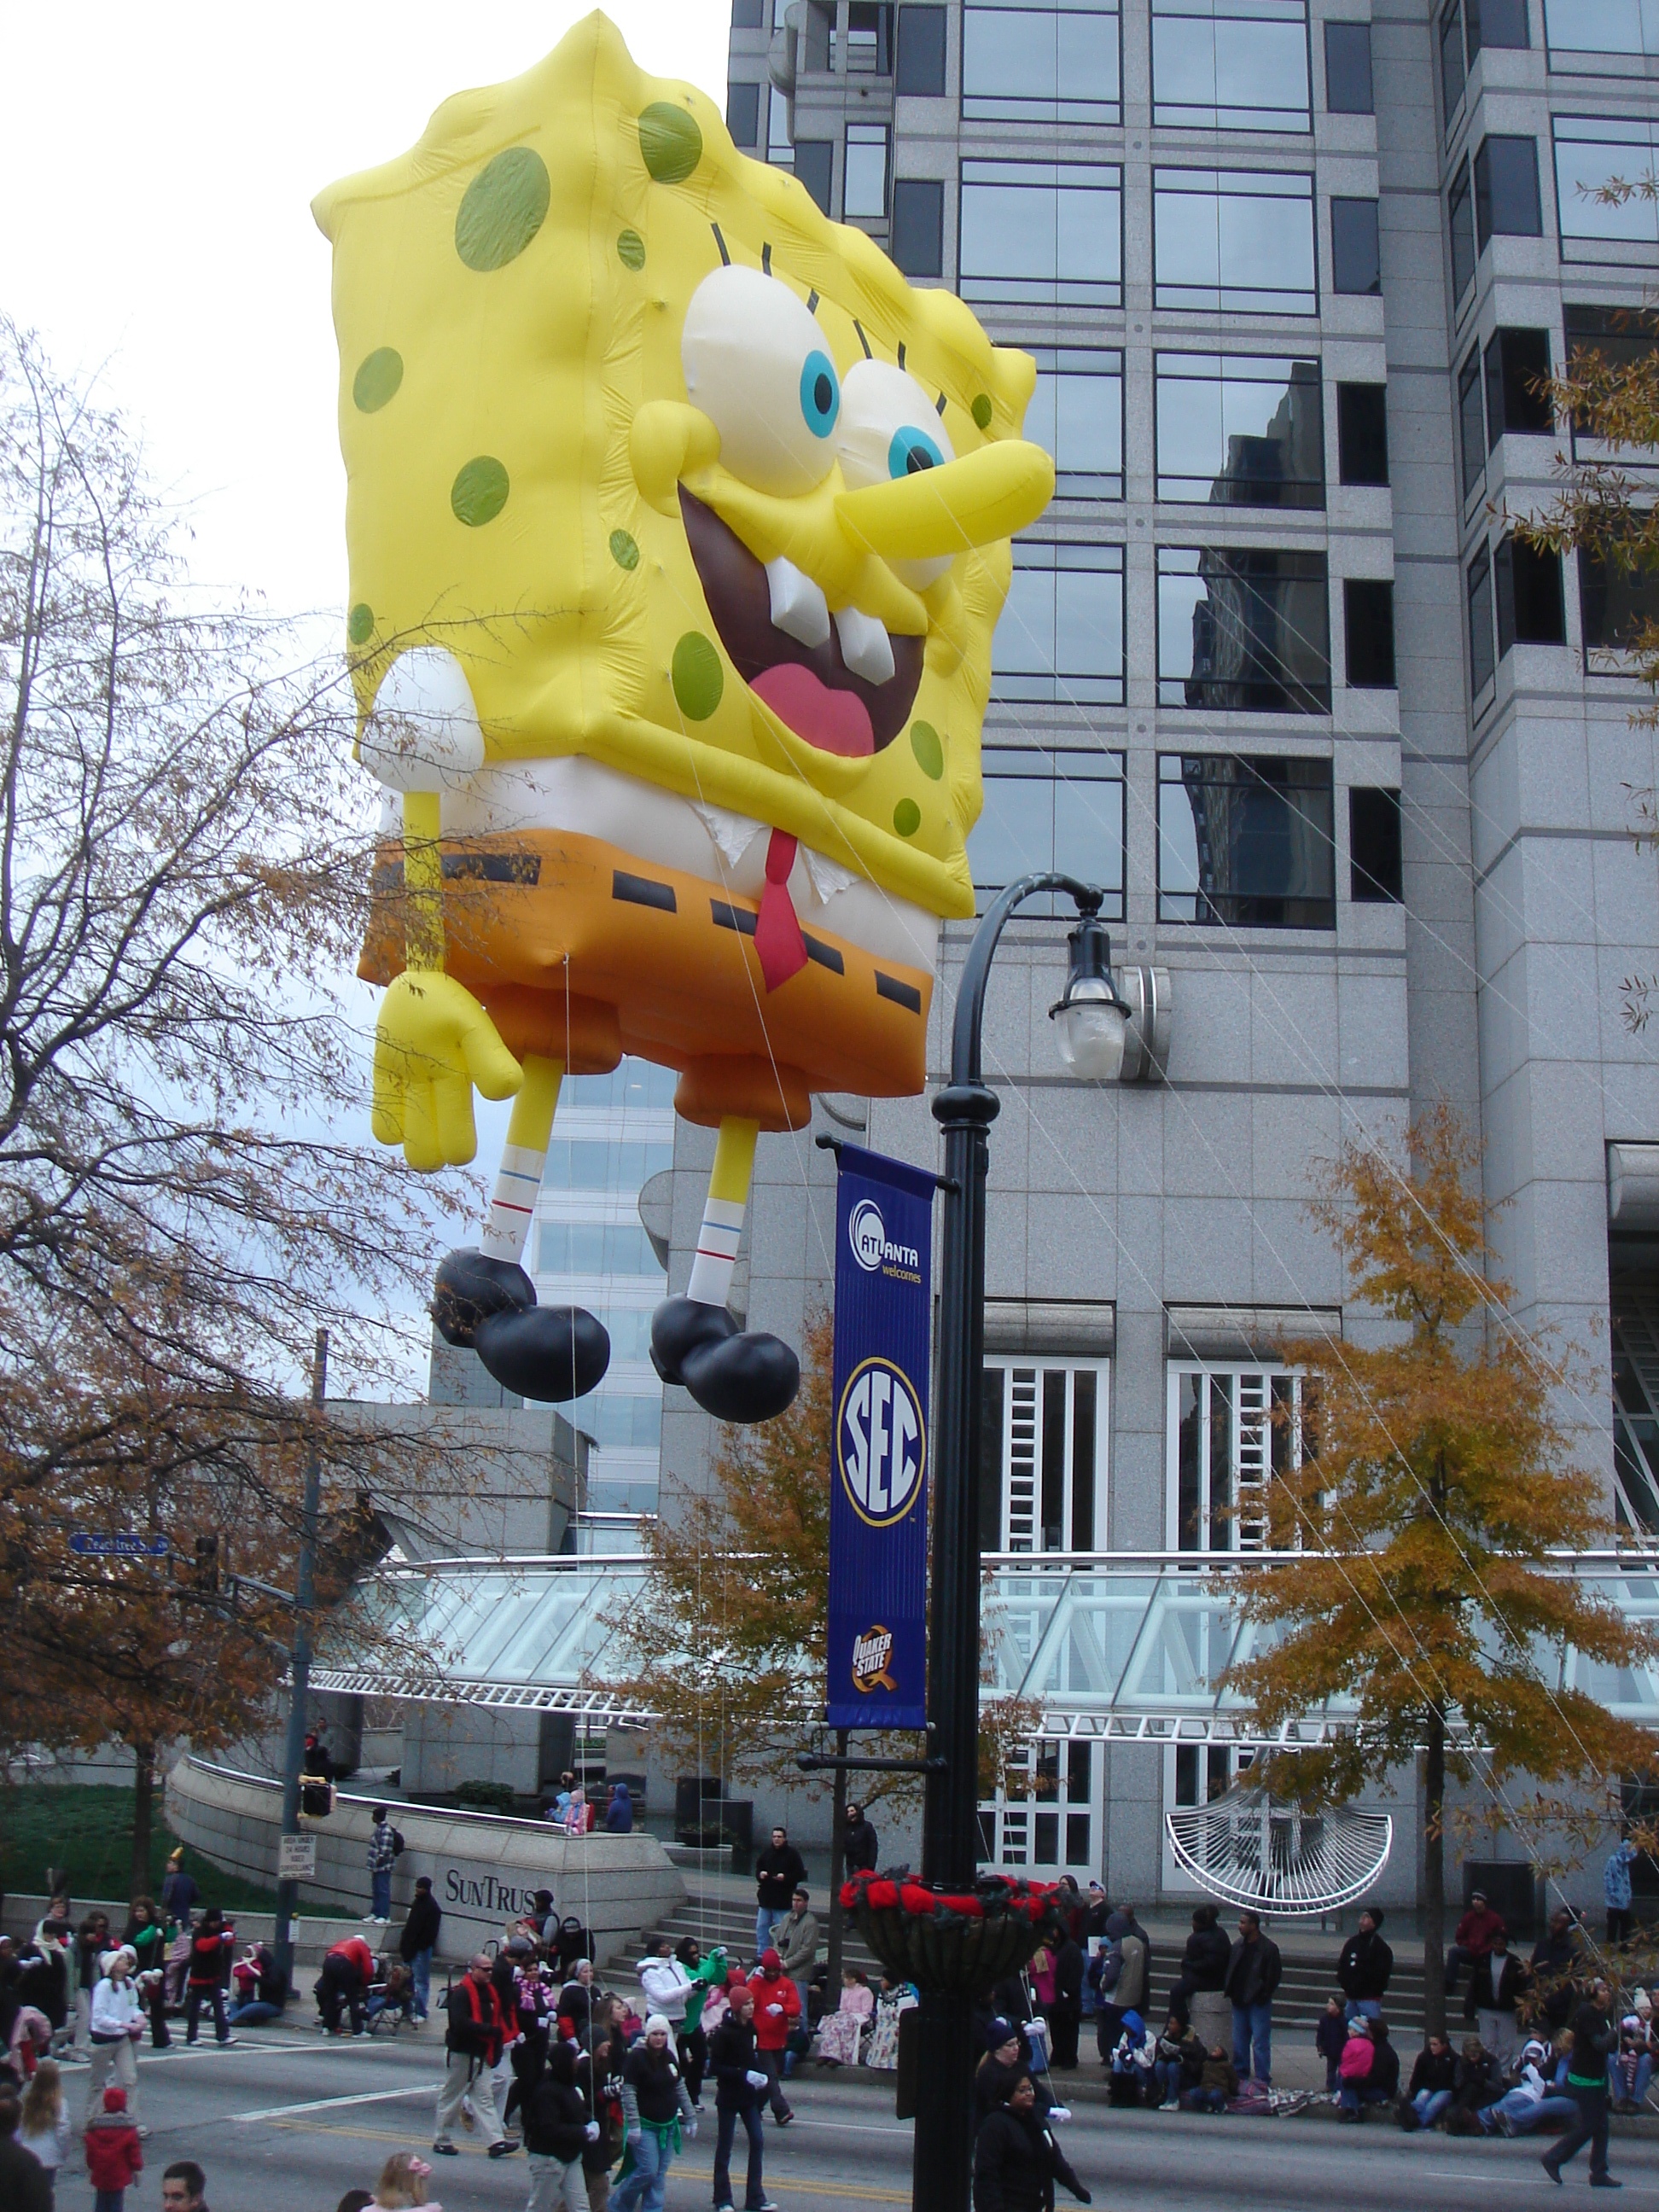 Sponge Bob Parade Balloon - Fabulous Inflatables, Spongebob Square Pants